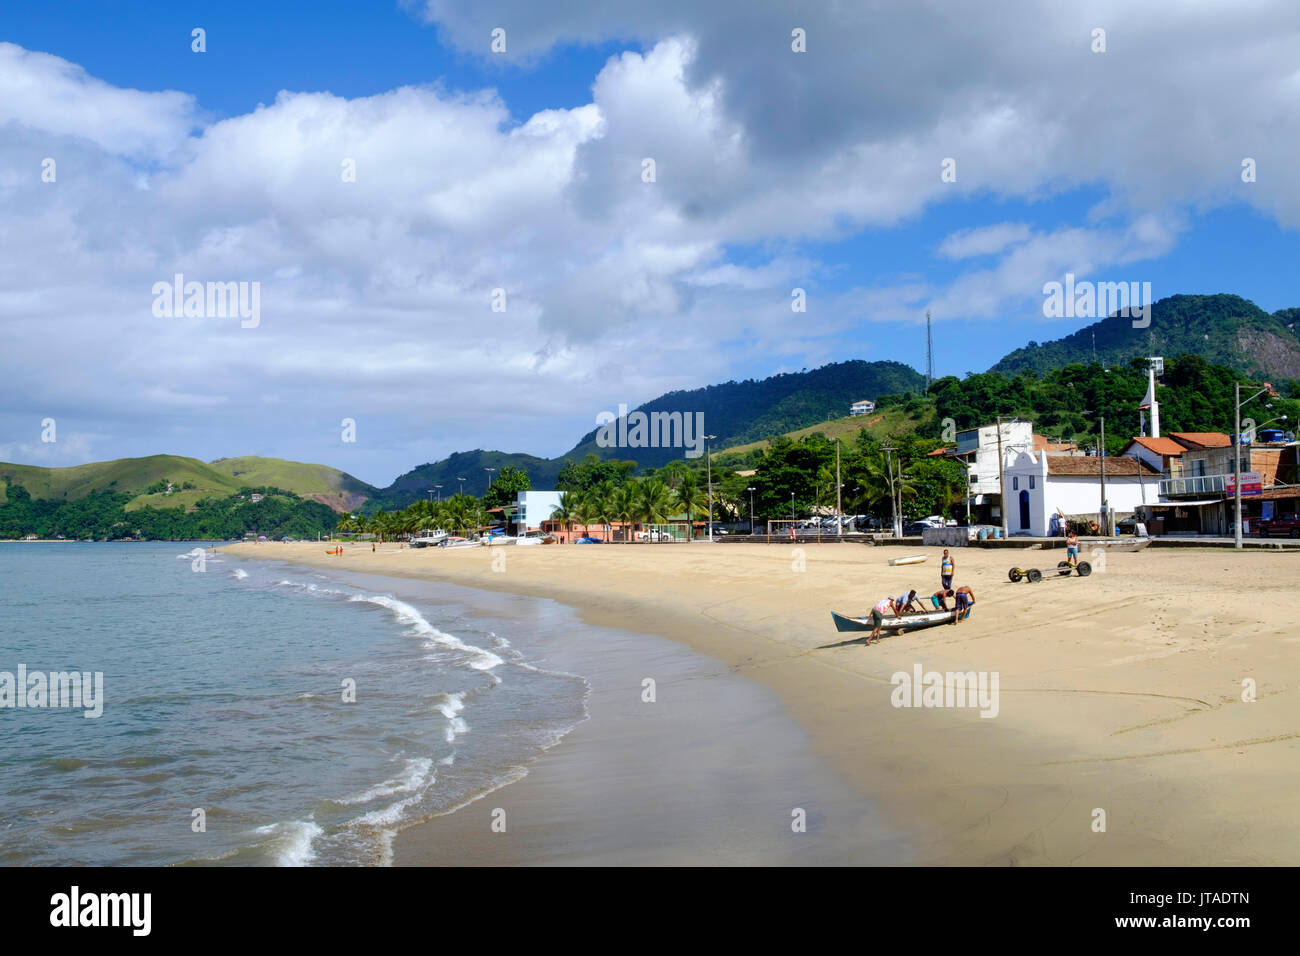 The beach in Abraao village on Ilha Grande, Brazil's Green Coast, Brazil Stock Photo